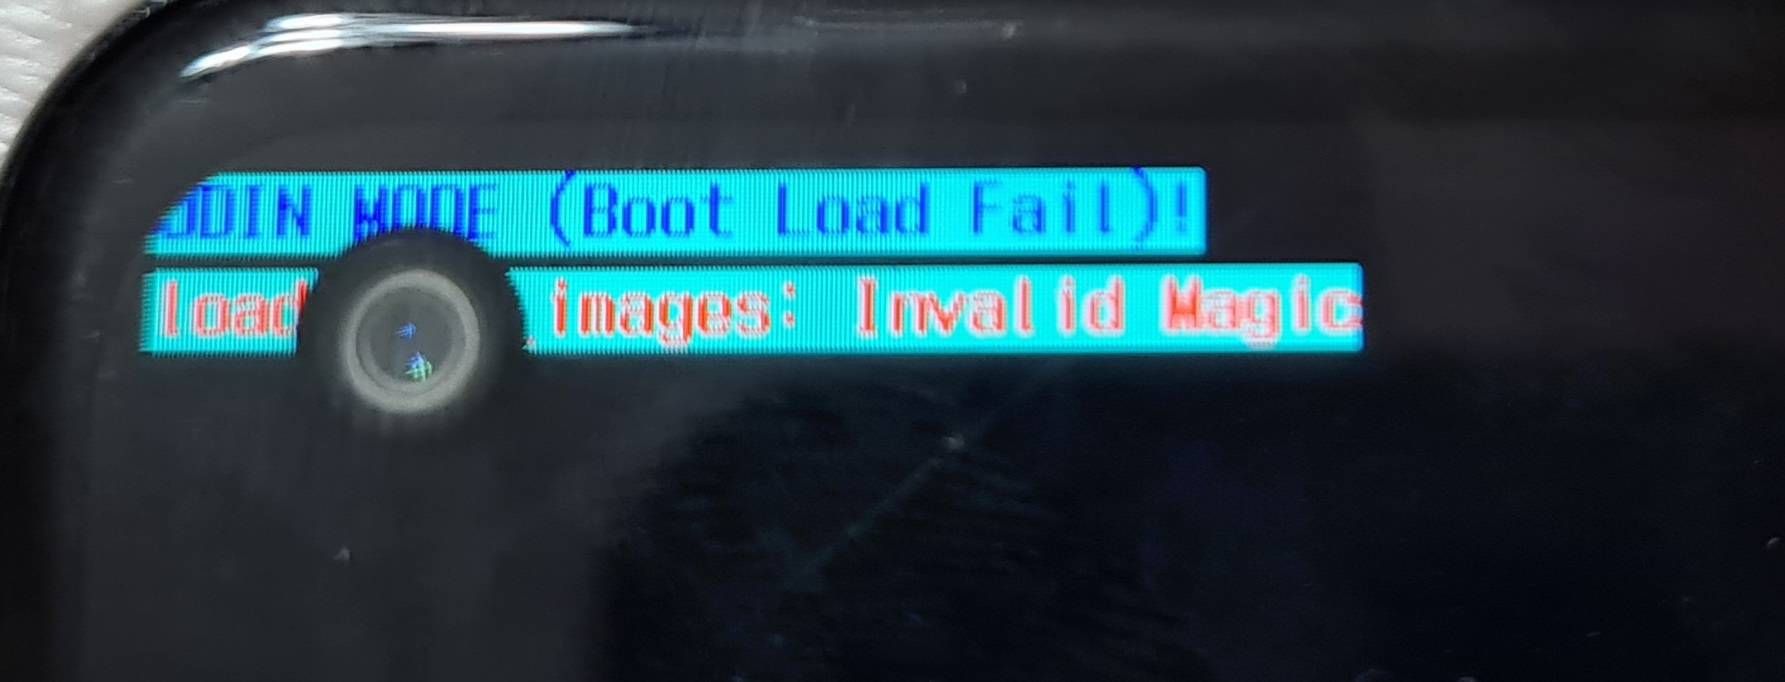 Boot Load Fail - A21S - Samsung Community